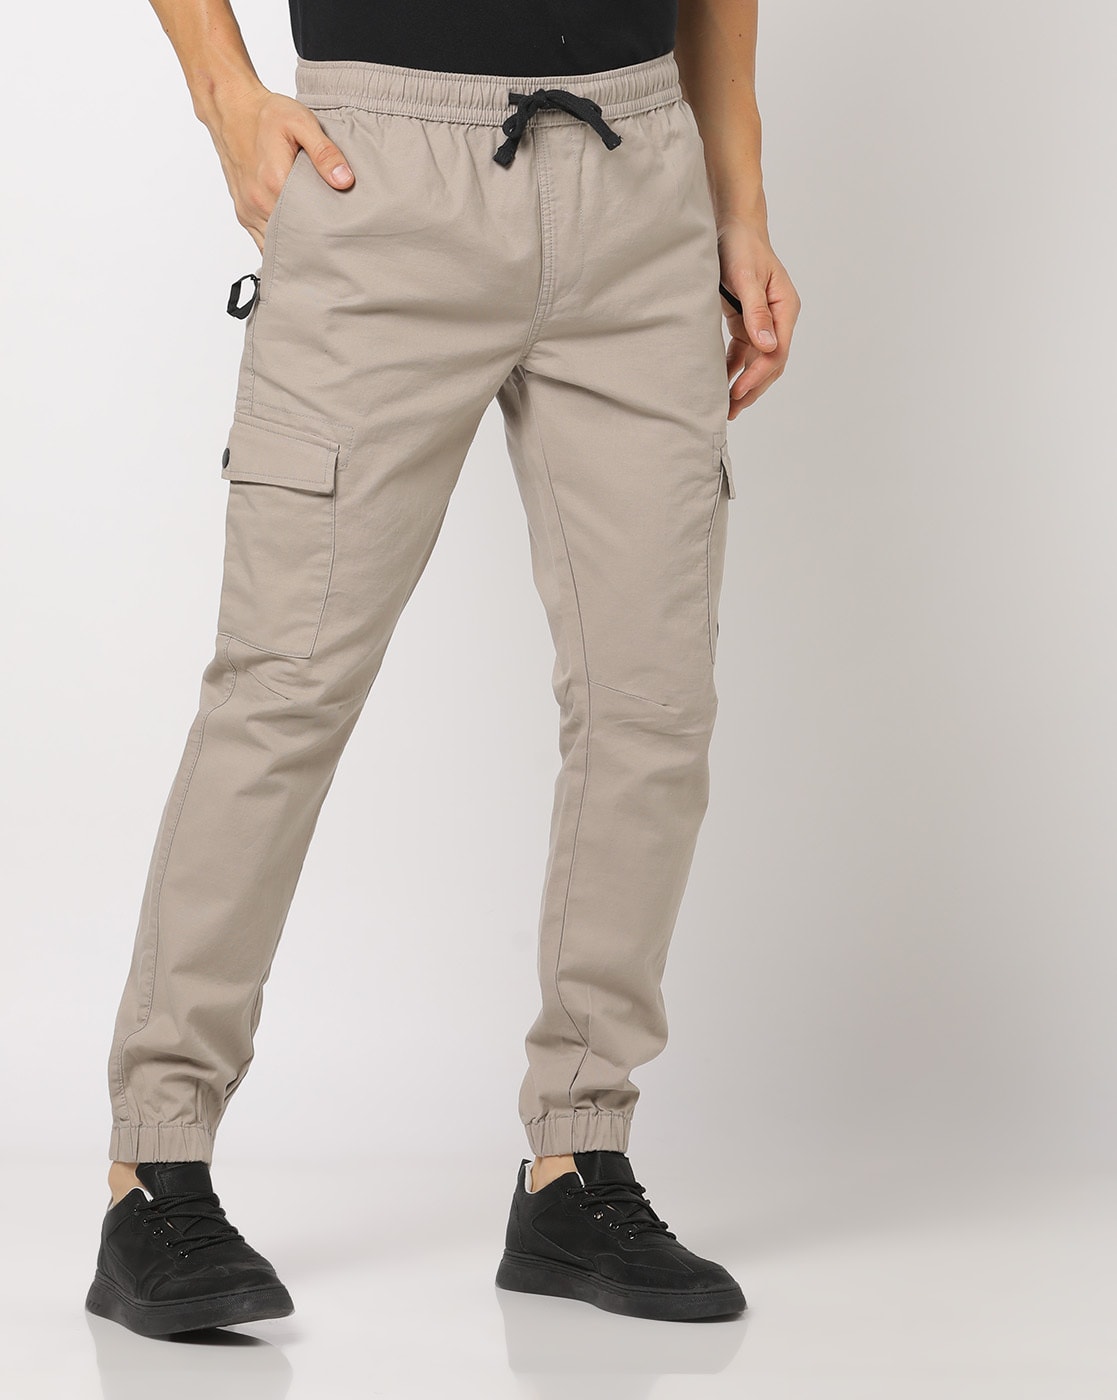 US Men's Cargo Pants Work Trousers 100% Cotton Tactical Combat Outdoor Pant  | eBay